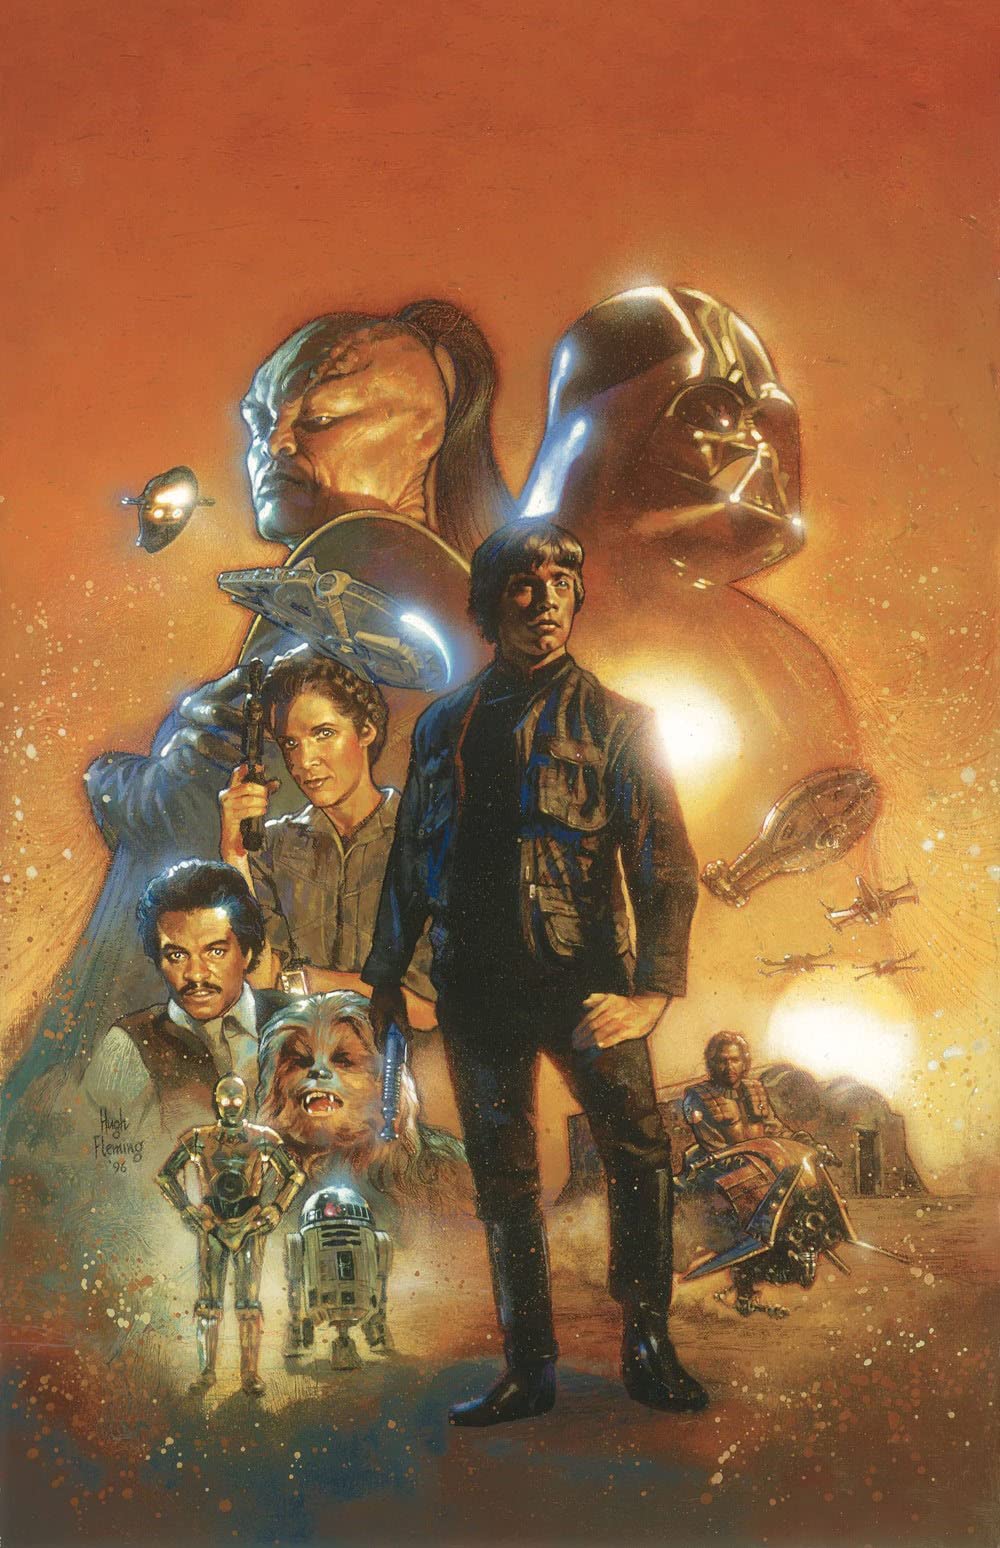 Star Wars Legends: The New Republic Omnibus - Volume 1